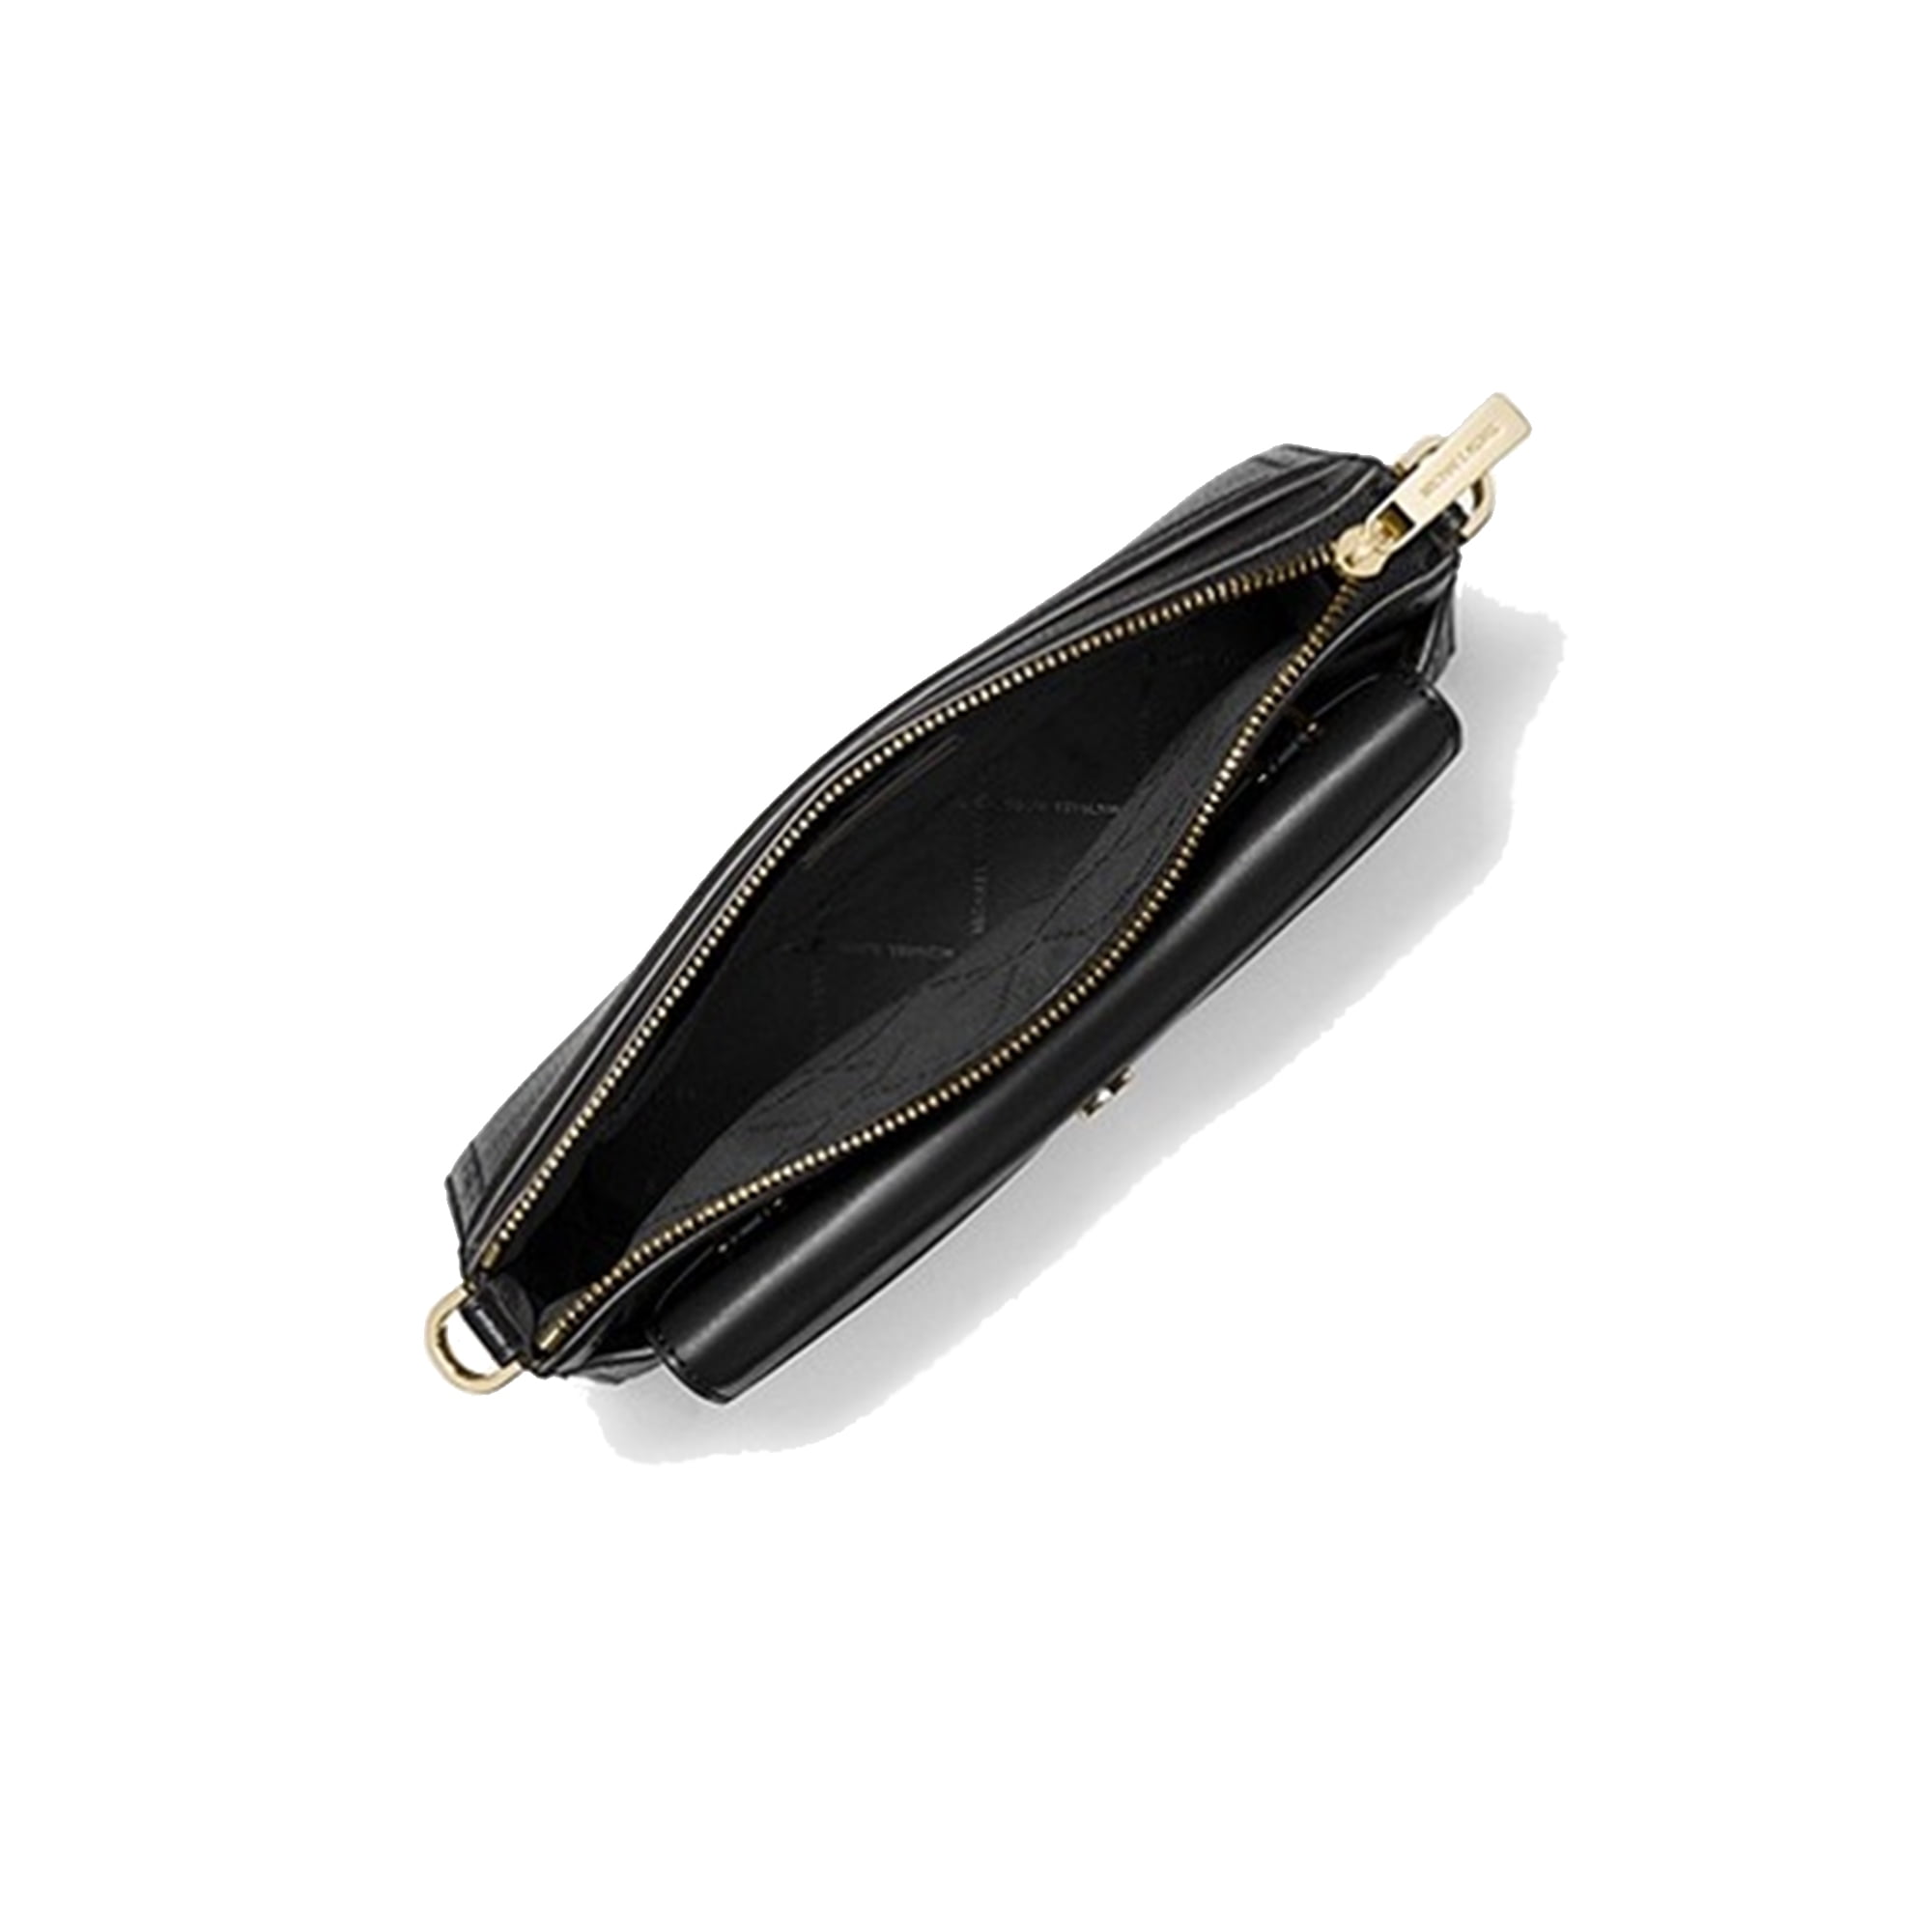 Maisie Medium Pebbled Leather 3-In-1 Crossbody Bag By Michael Kors 